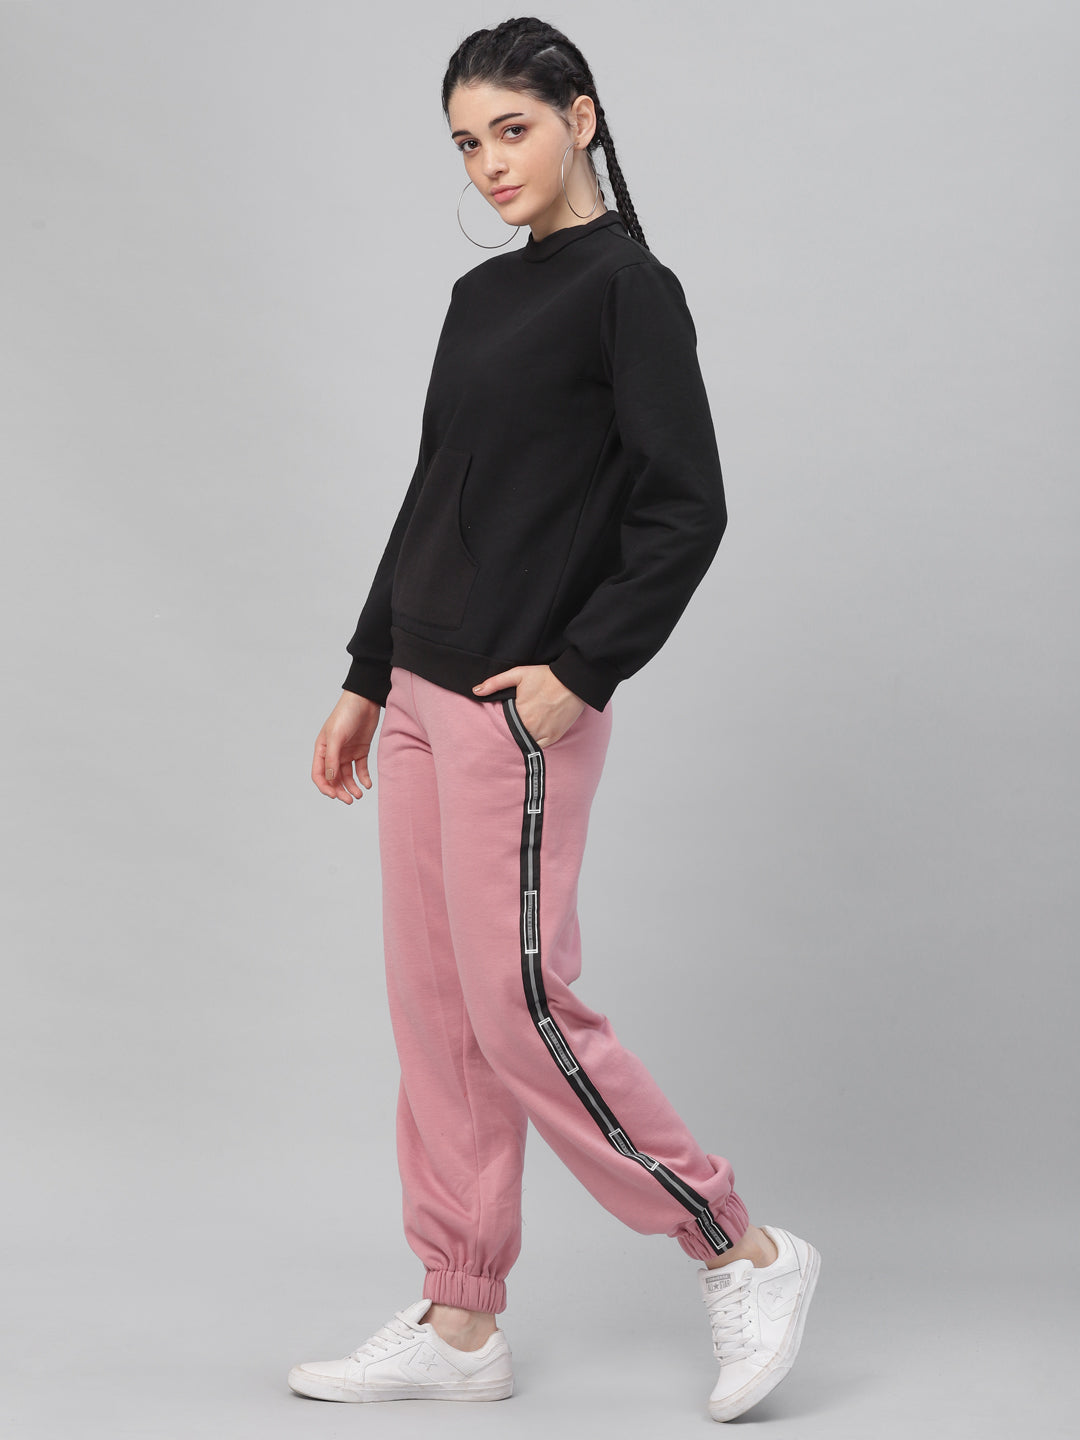 Athena Women Pink & Black Solid Sweatshirt with Joggers - Athena Lifestyle